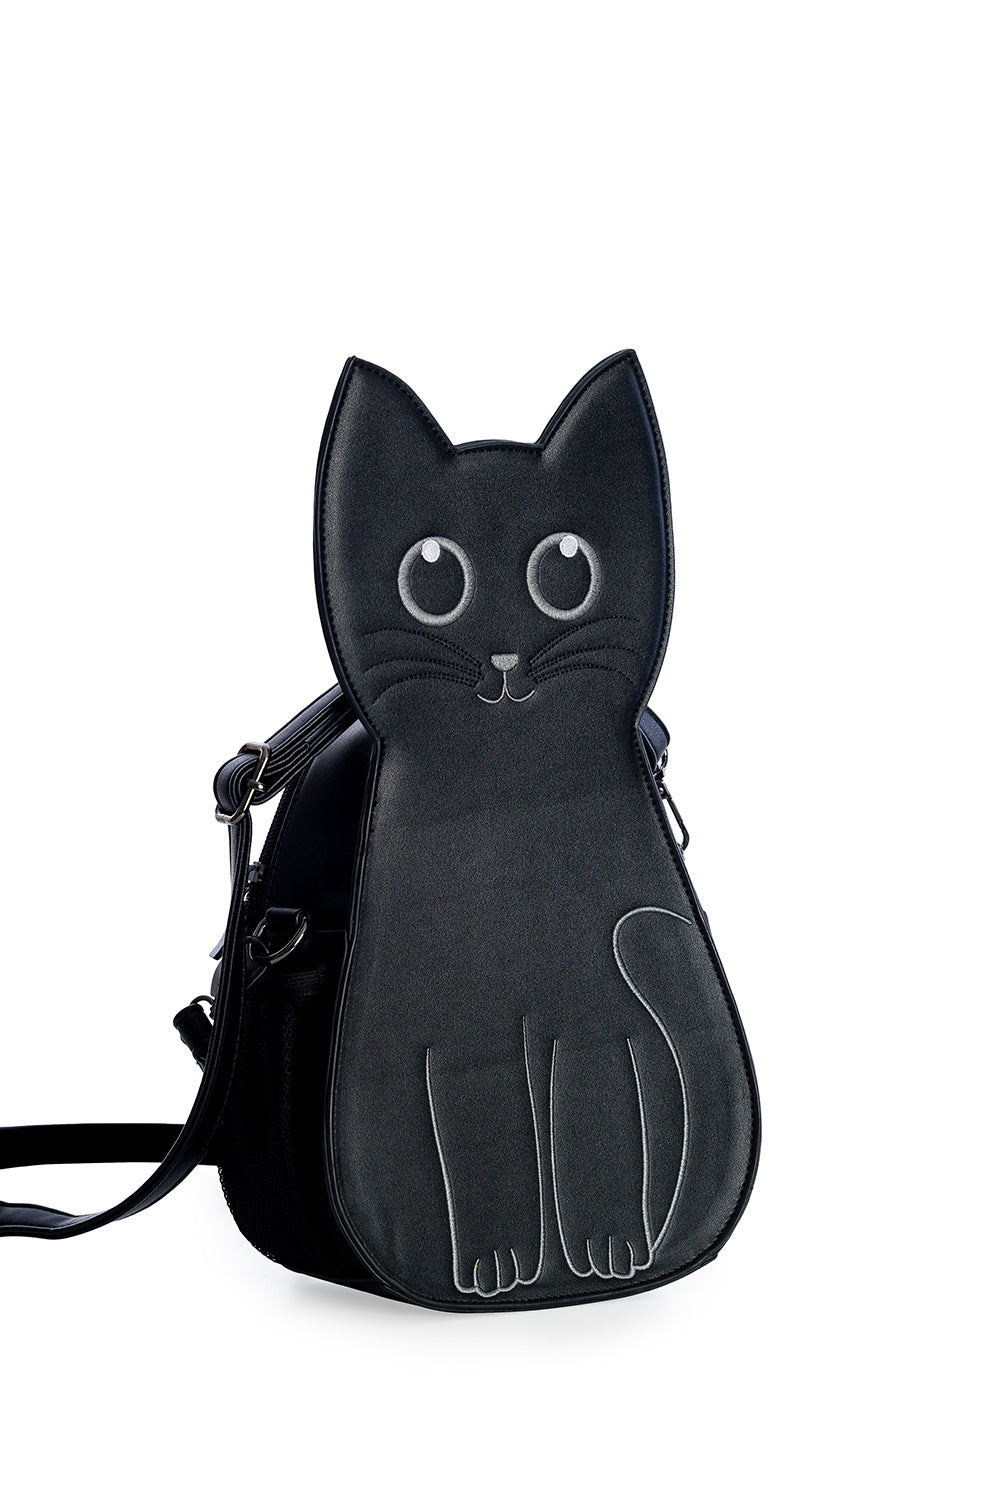 Schneiders Bags Kitty Kids backpack 27 cm - Terra